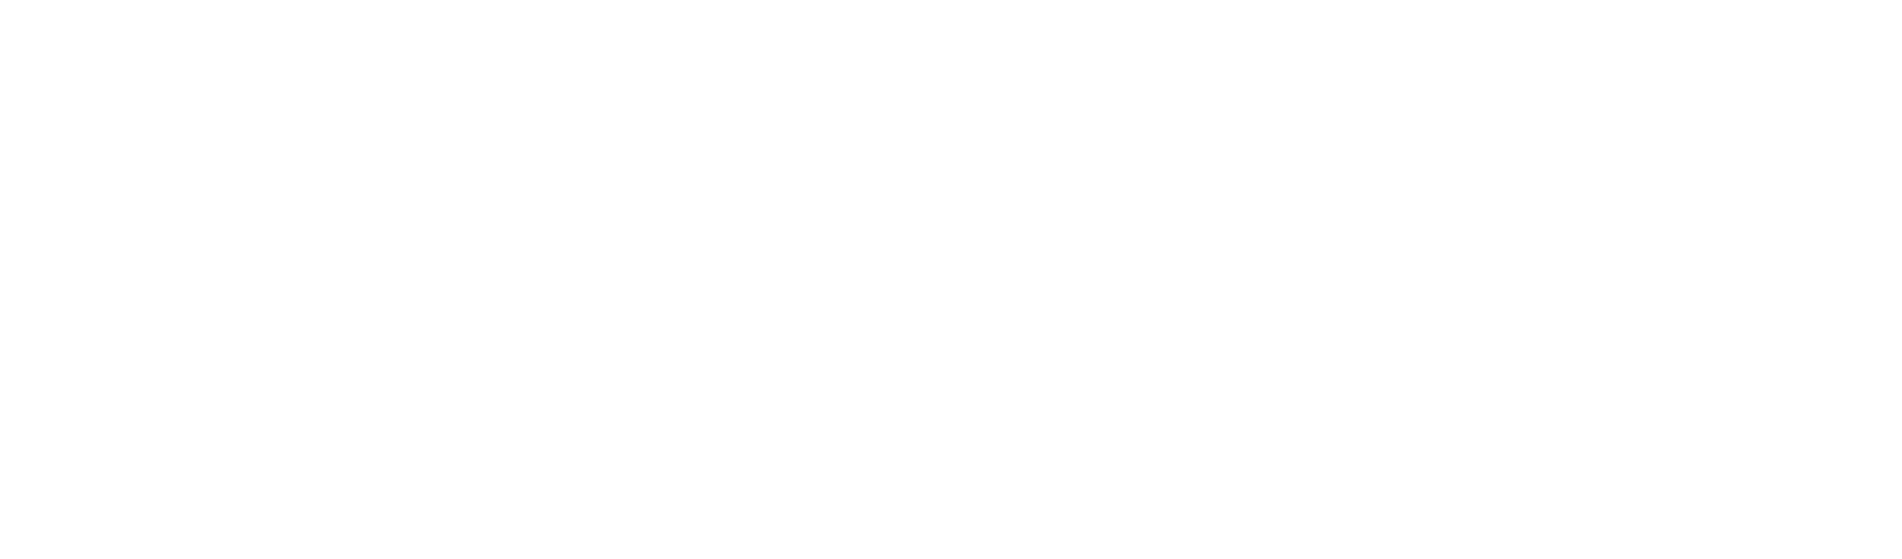 Grounds & Vine logo scroll